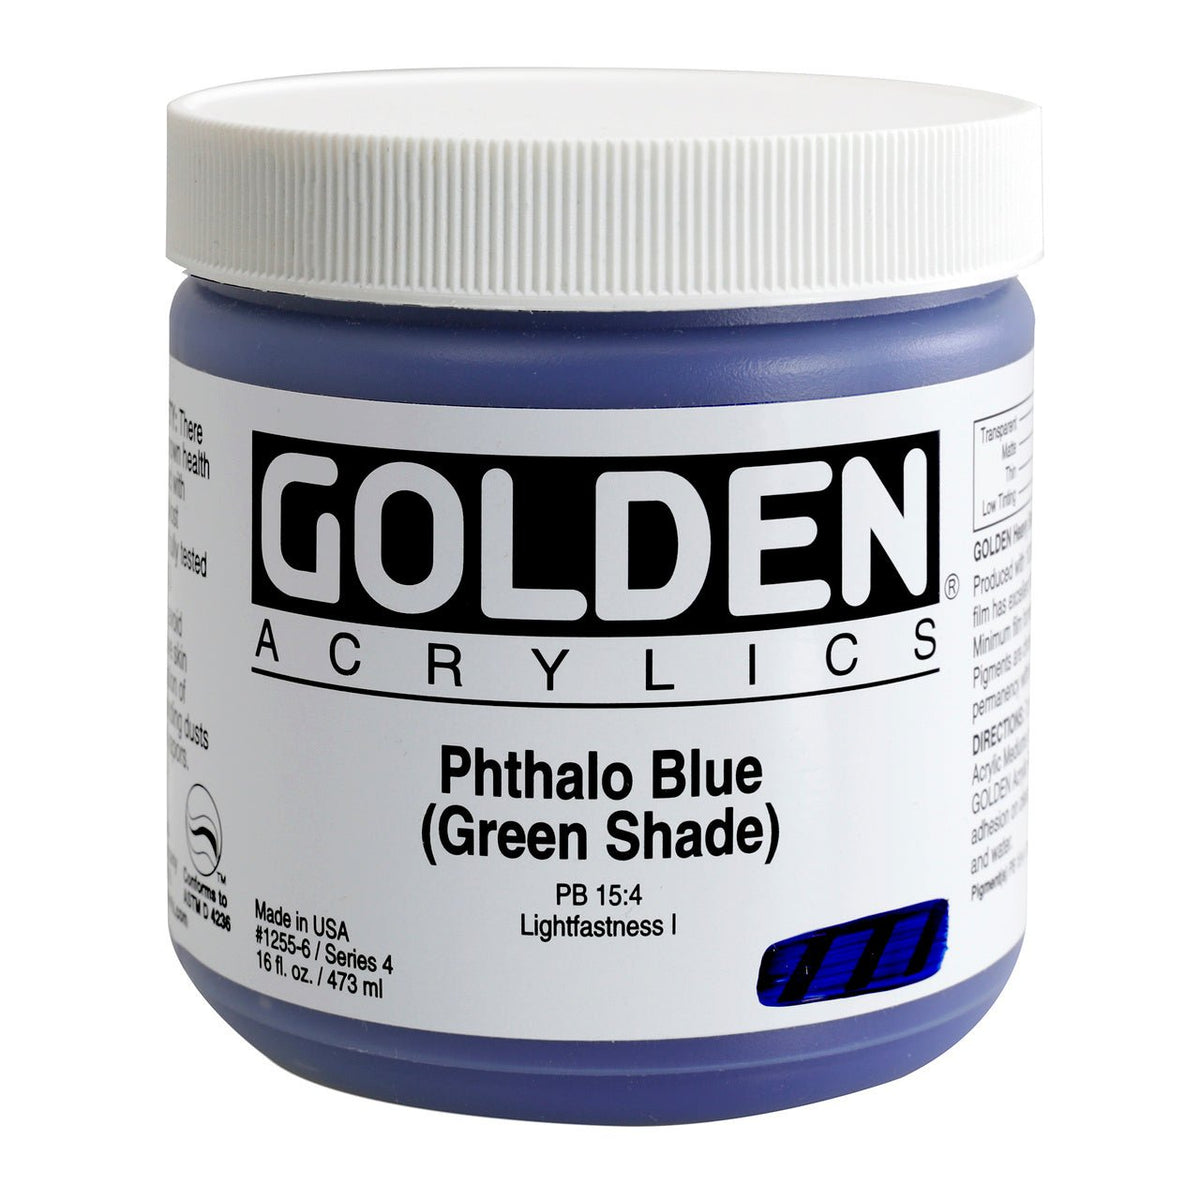 Golden Heavy Body Acrylic Phthalo Blue (green shade) 16 oz - merriartist.com